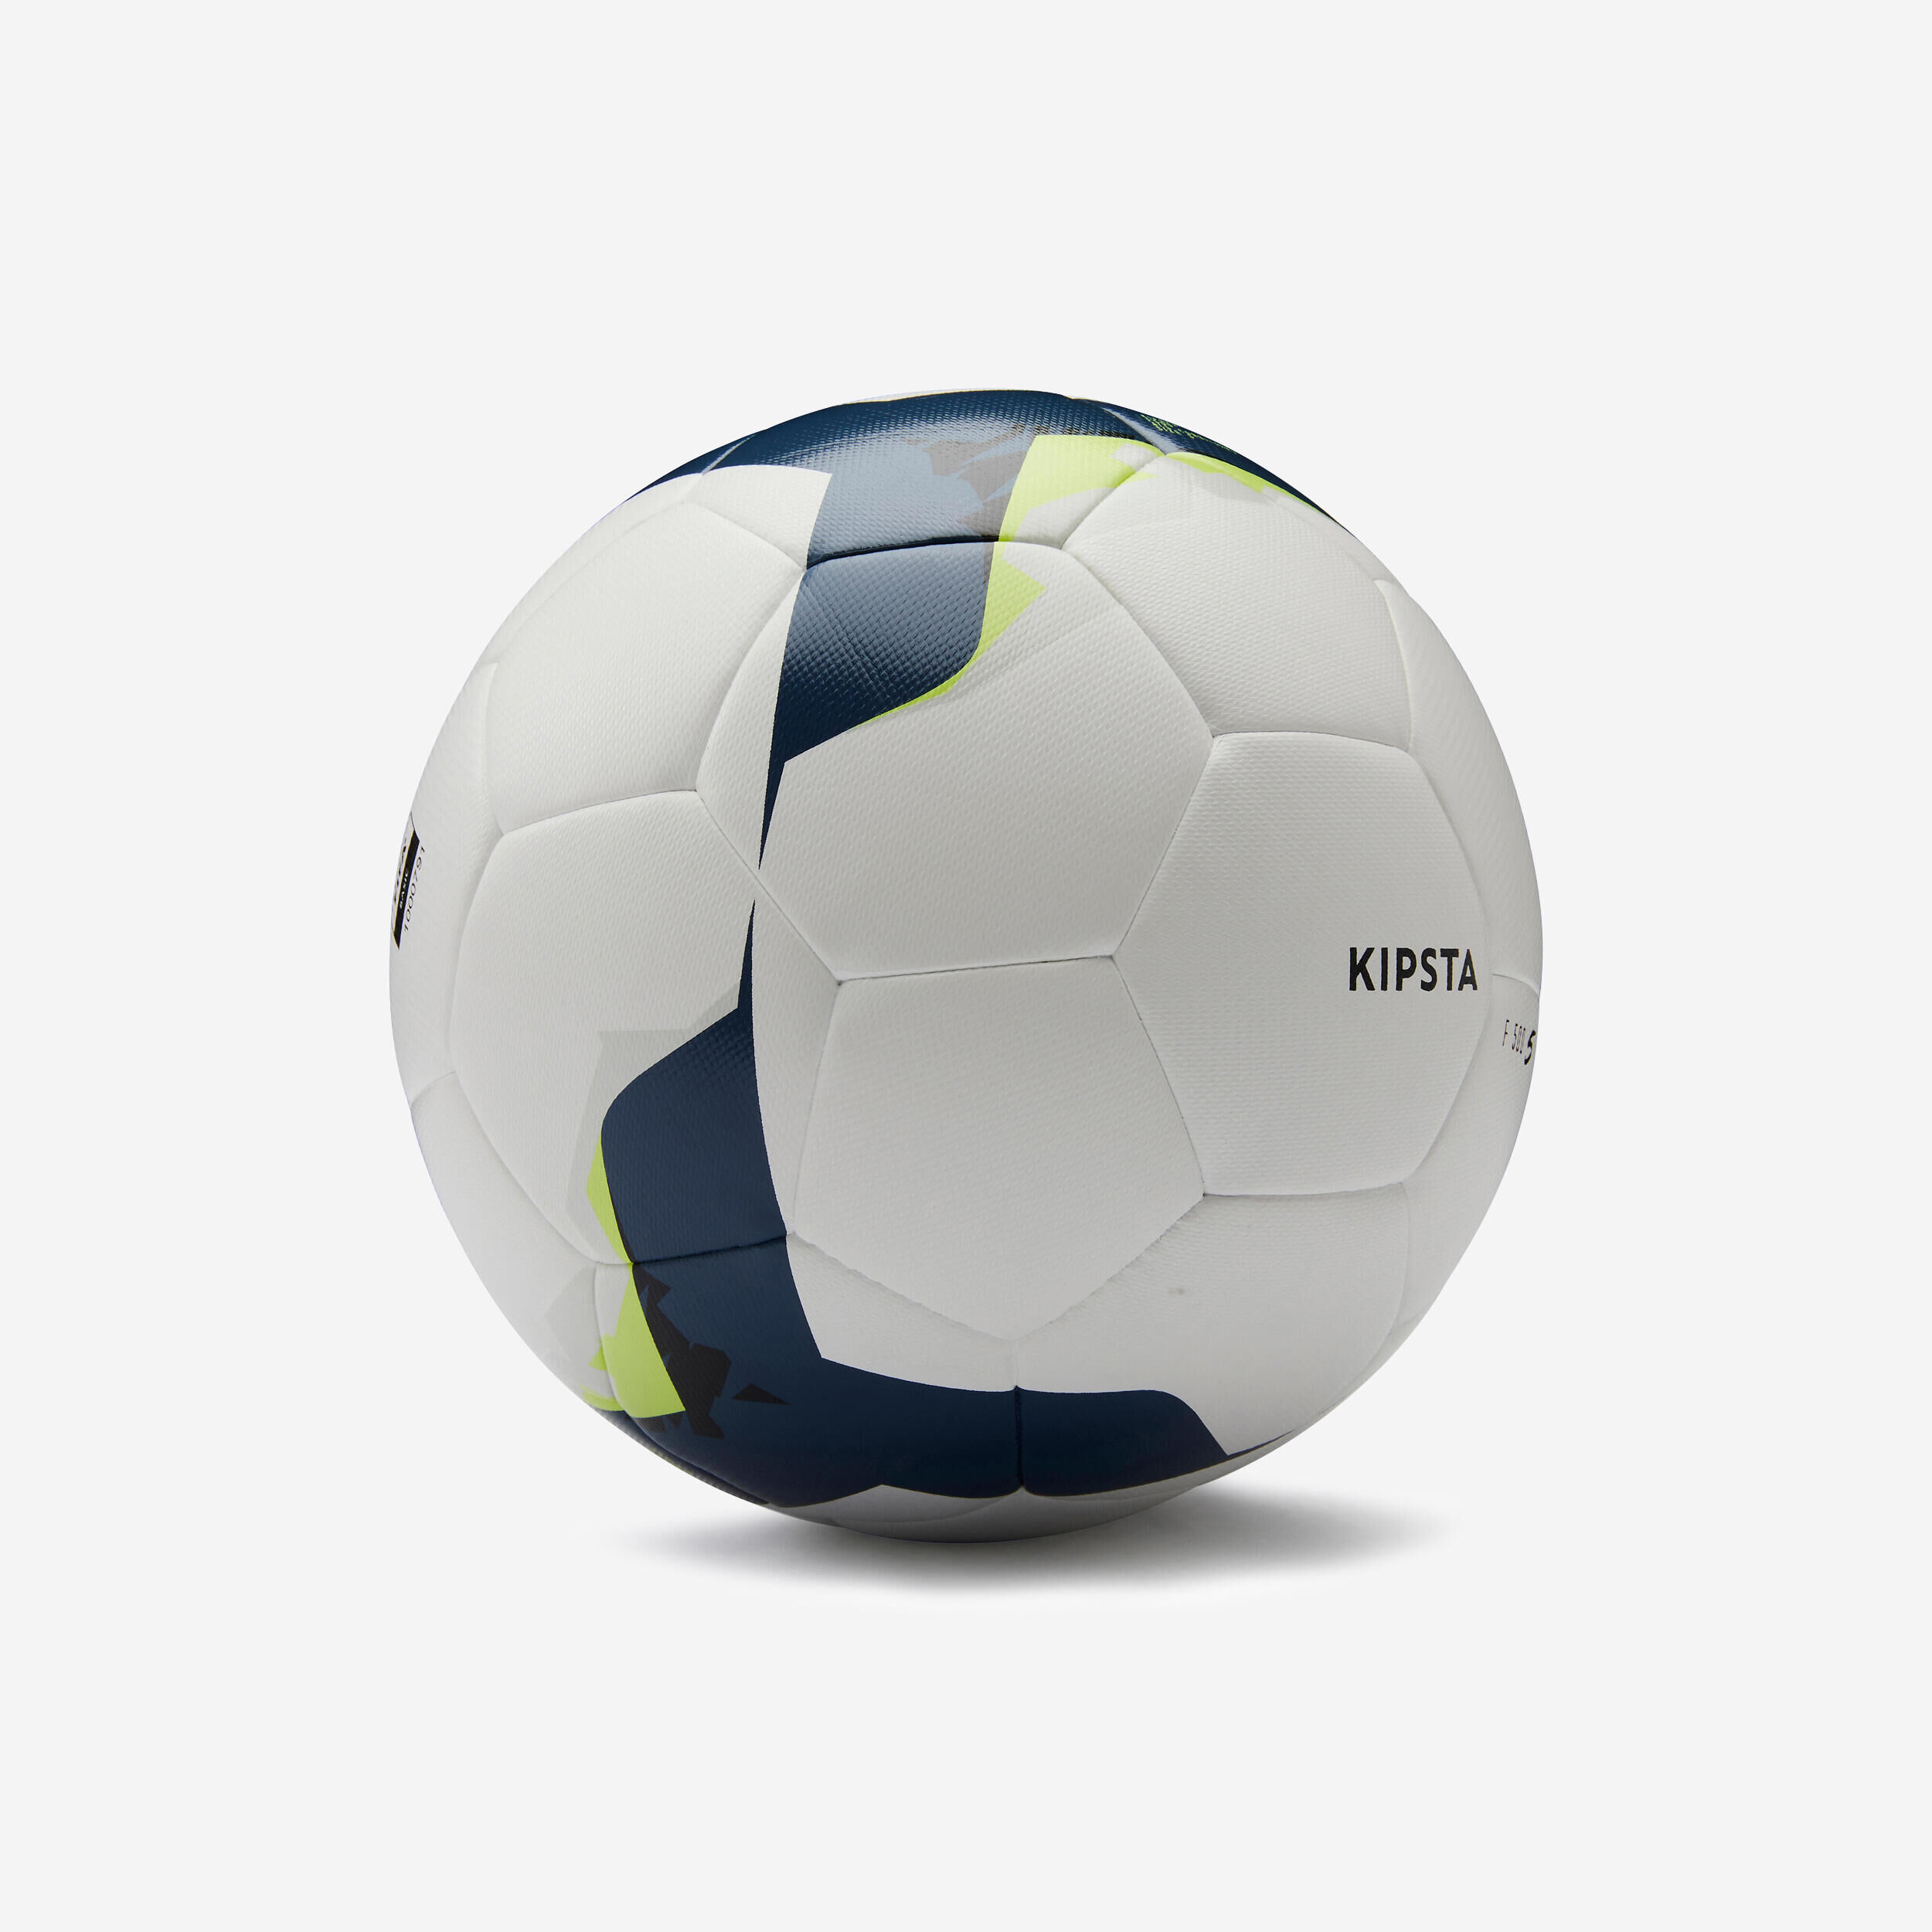 KIPSTA Adult size 5 fifa hybrid football, white